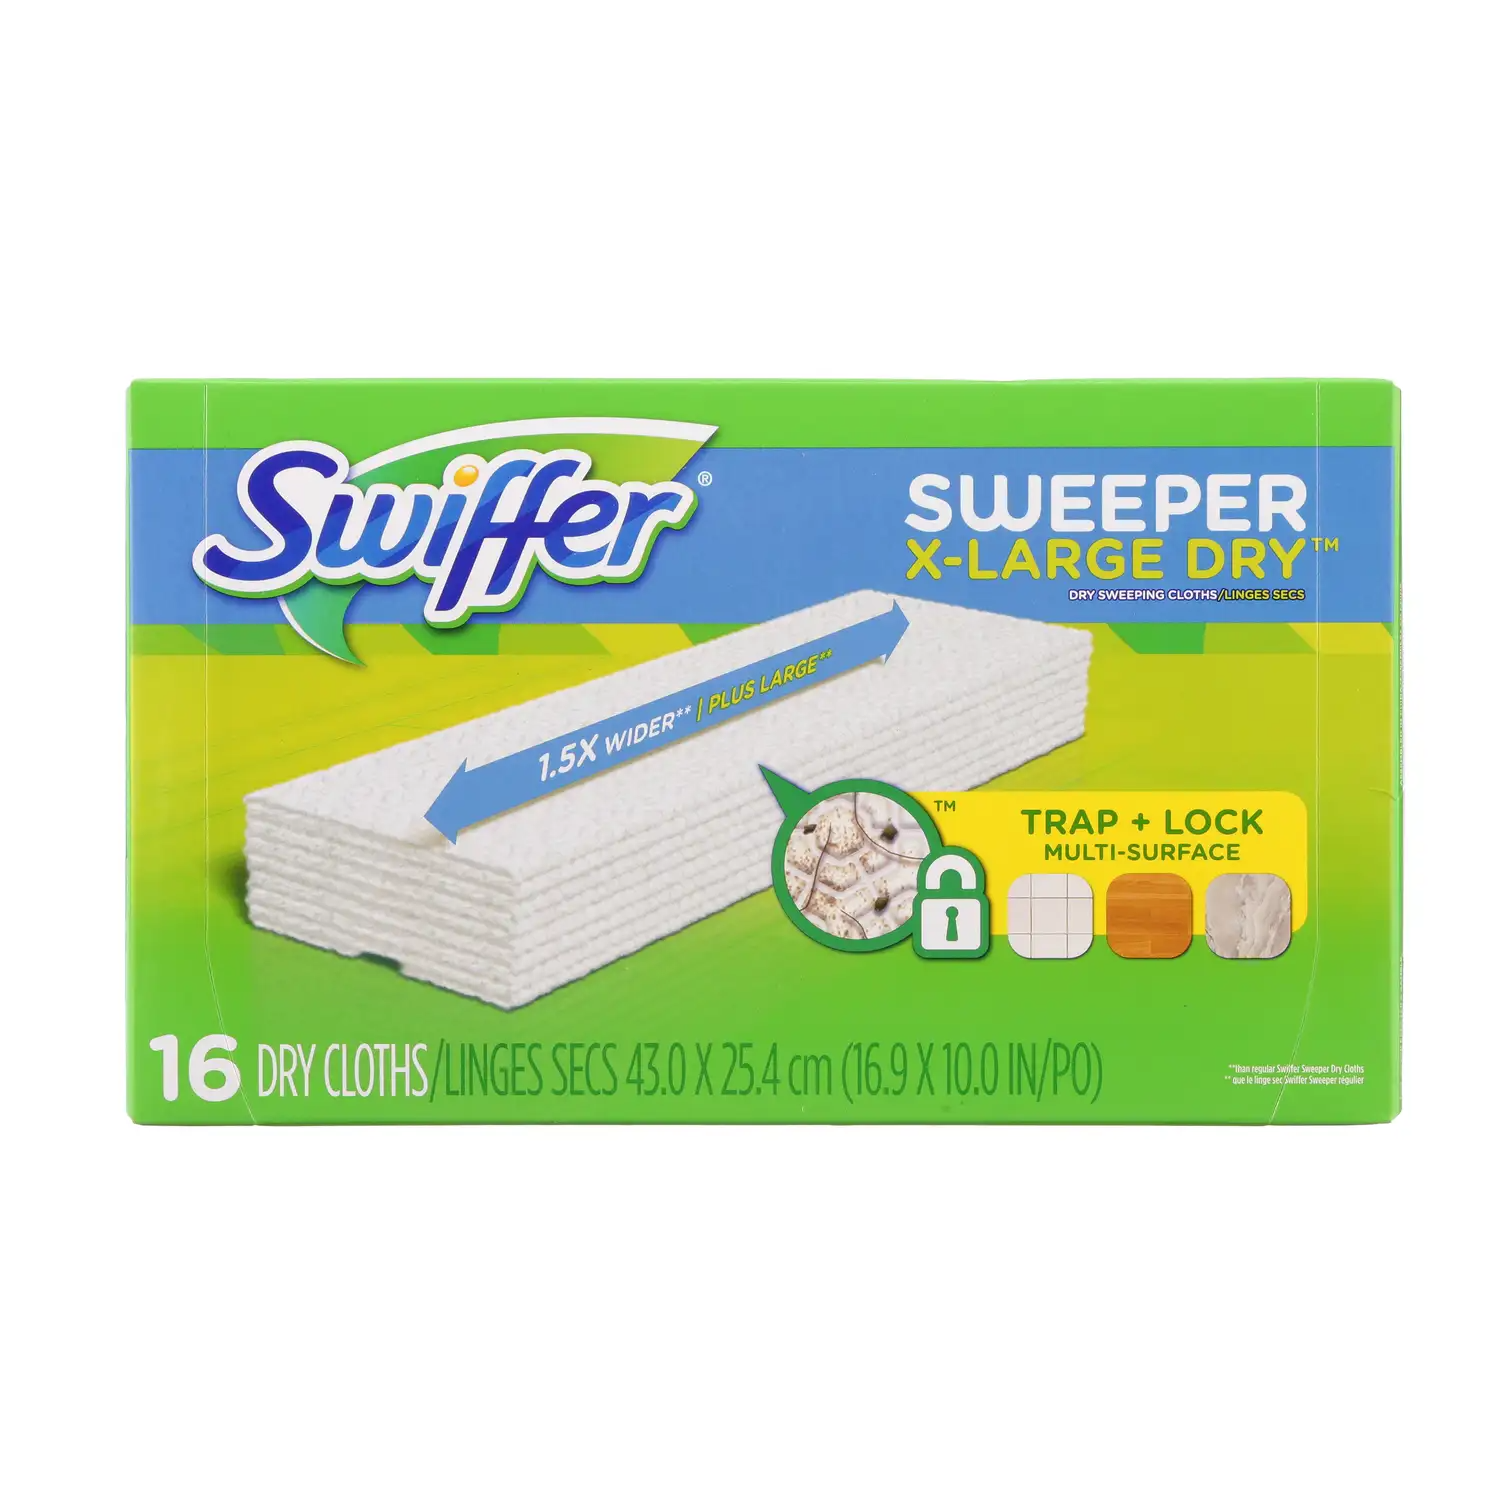 Swiffer Sweeper XL Heavy Duty Multi-Surface Dry Cloth Refills, 10